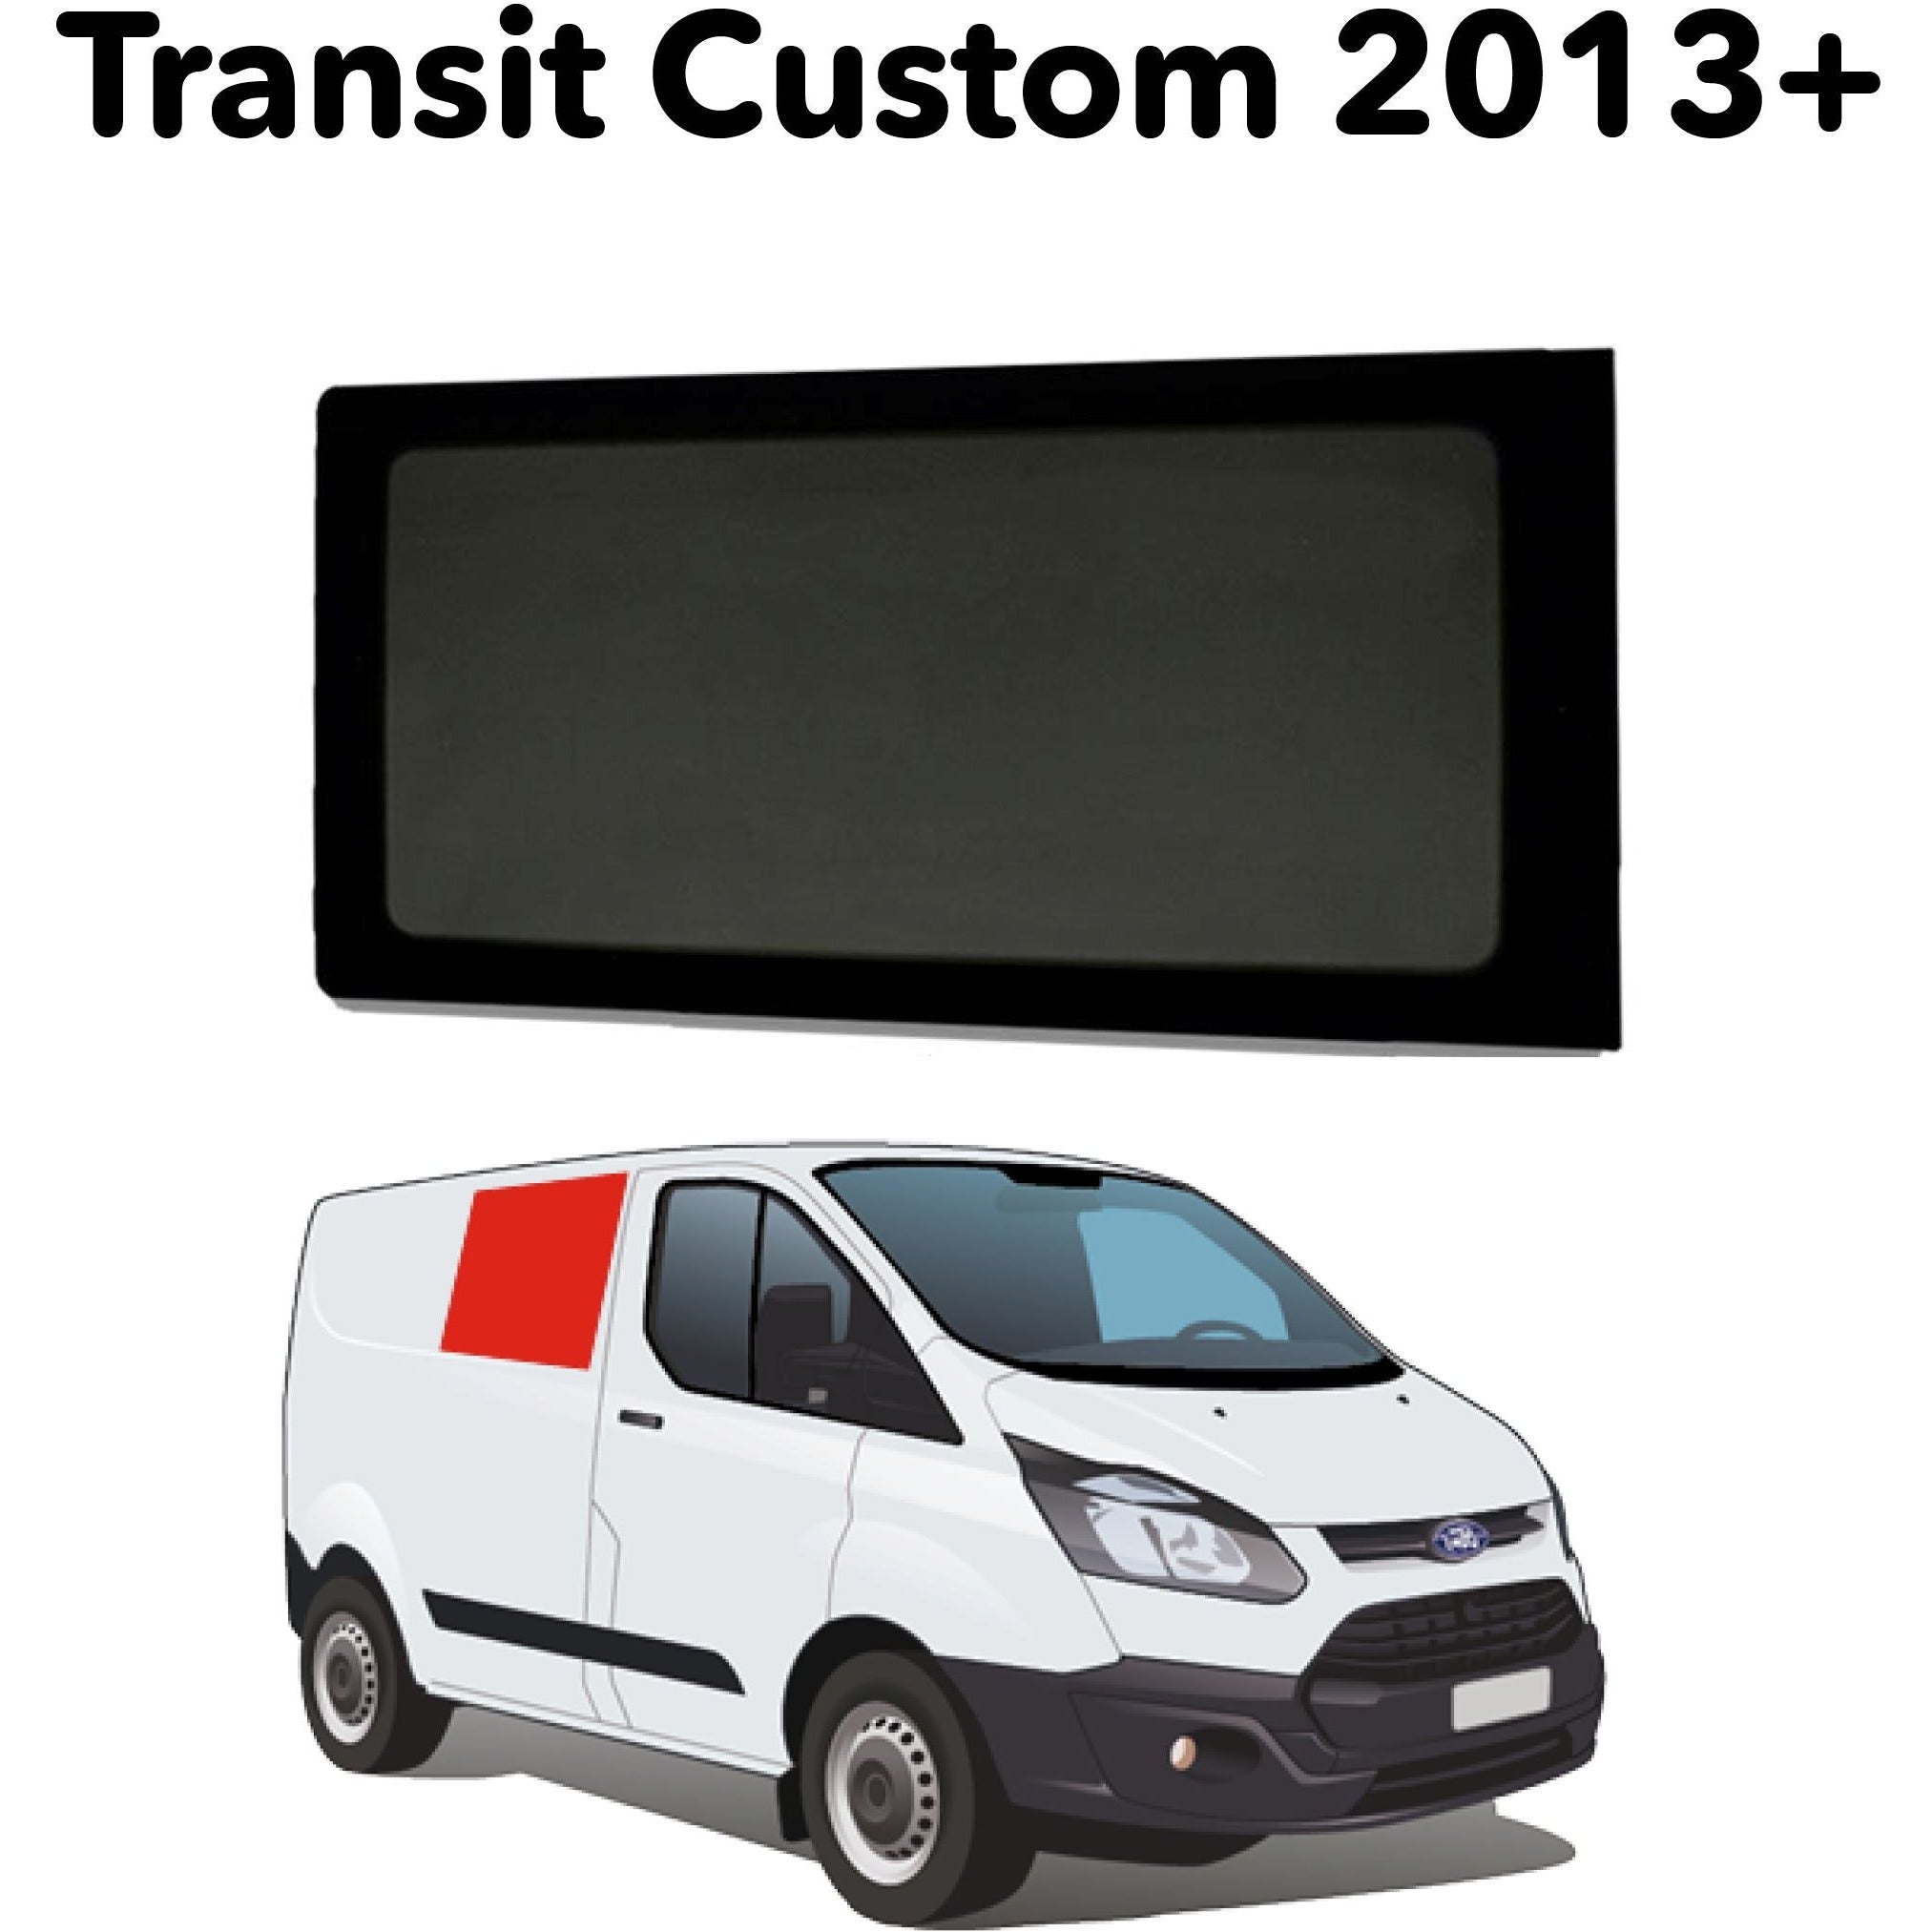 Right Fixed Window Ford Transit Custom 2013+ - Non-sliding Door Camper Glass by Kiravans 